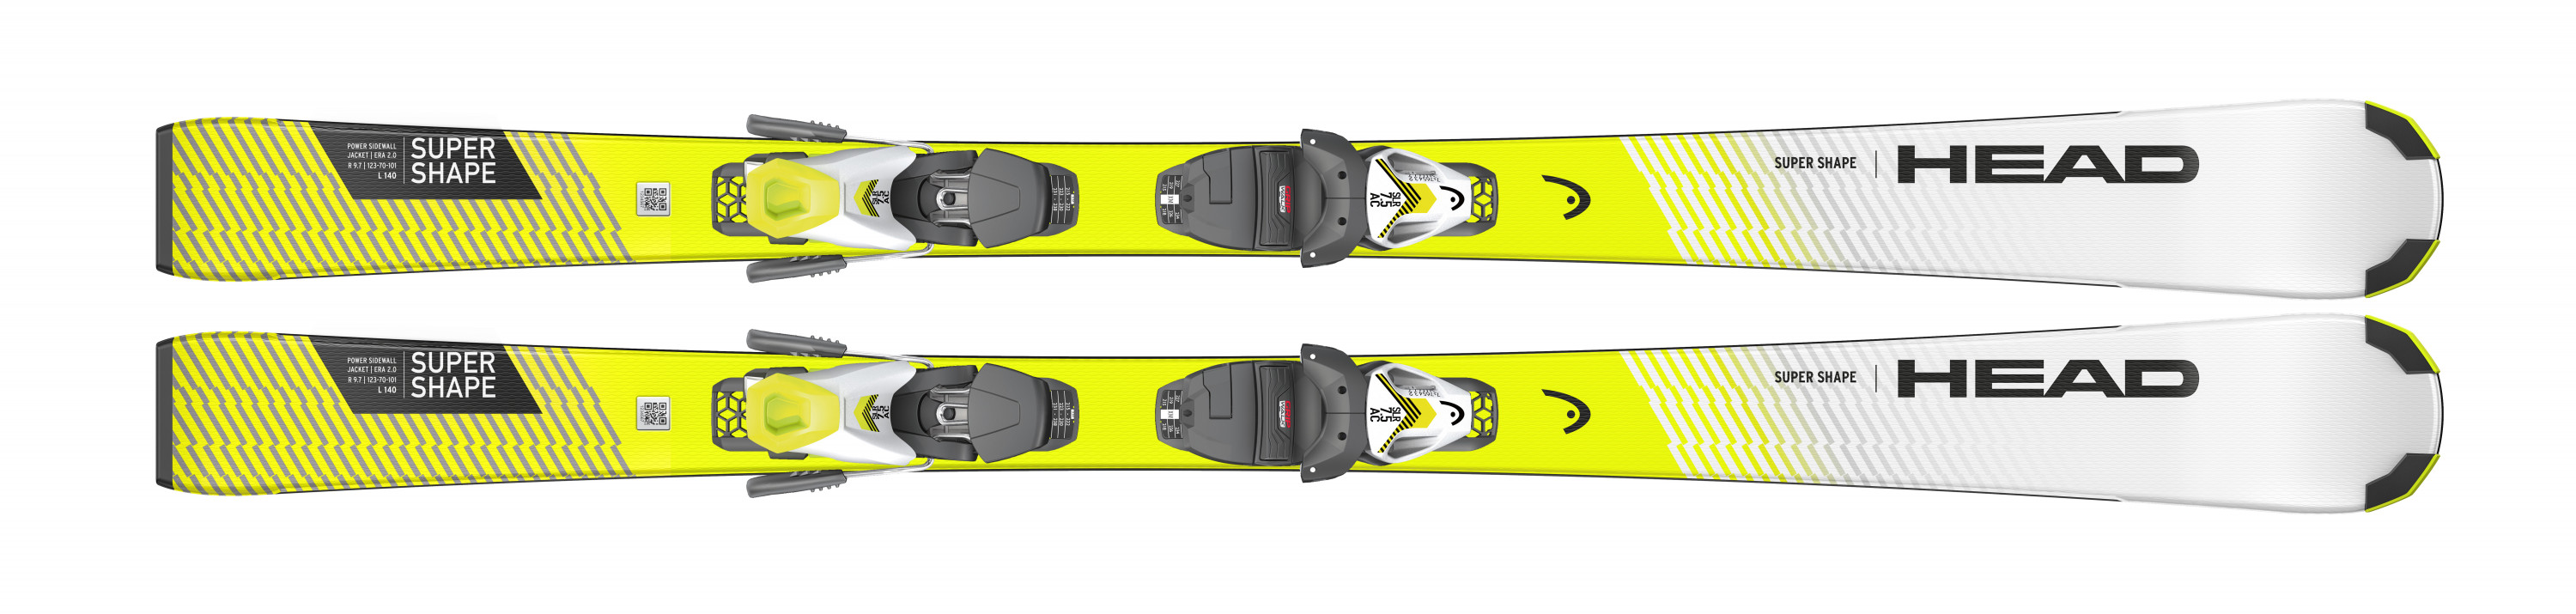 фото Горные лыжи head supershape slr pro + slr 7.5 ac 2021 neon yellow/white, 130 см